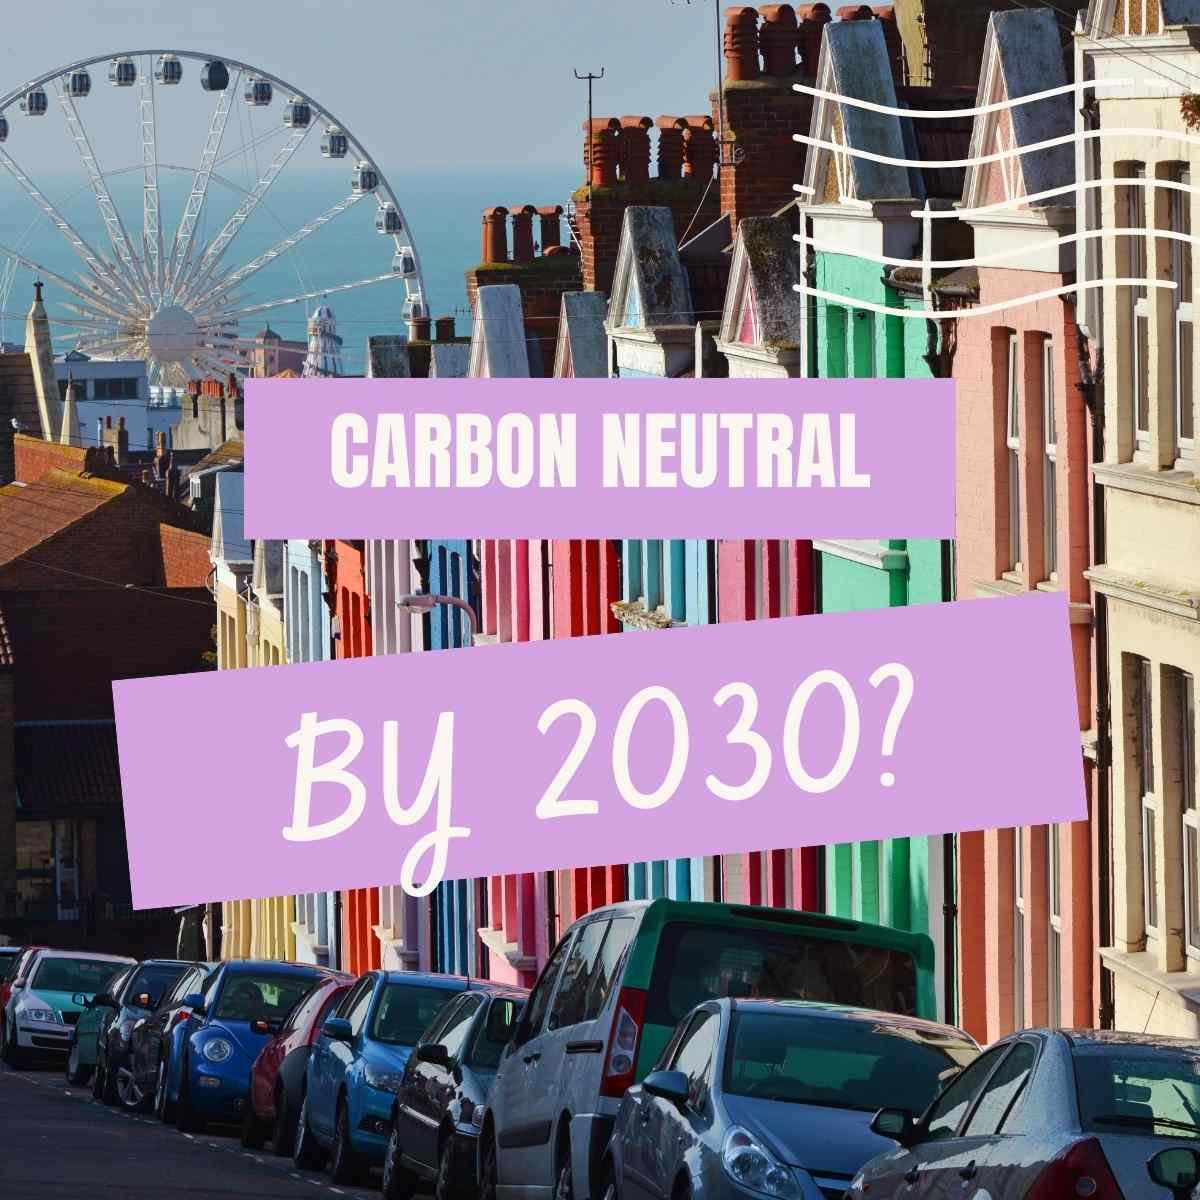 Brighton carbon neutral by 2030